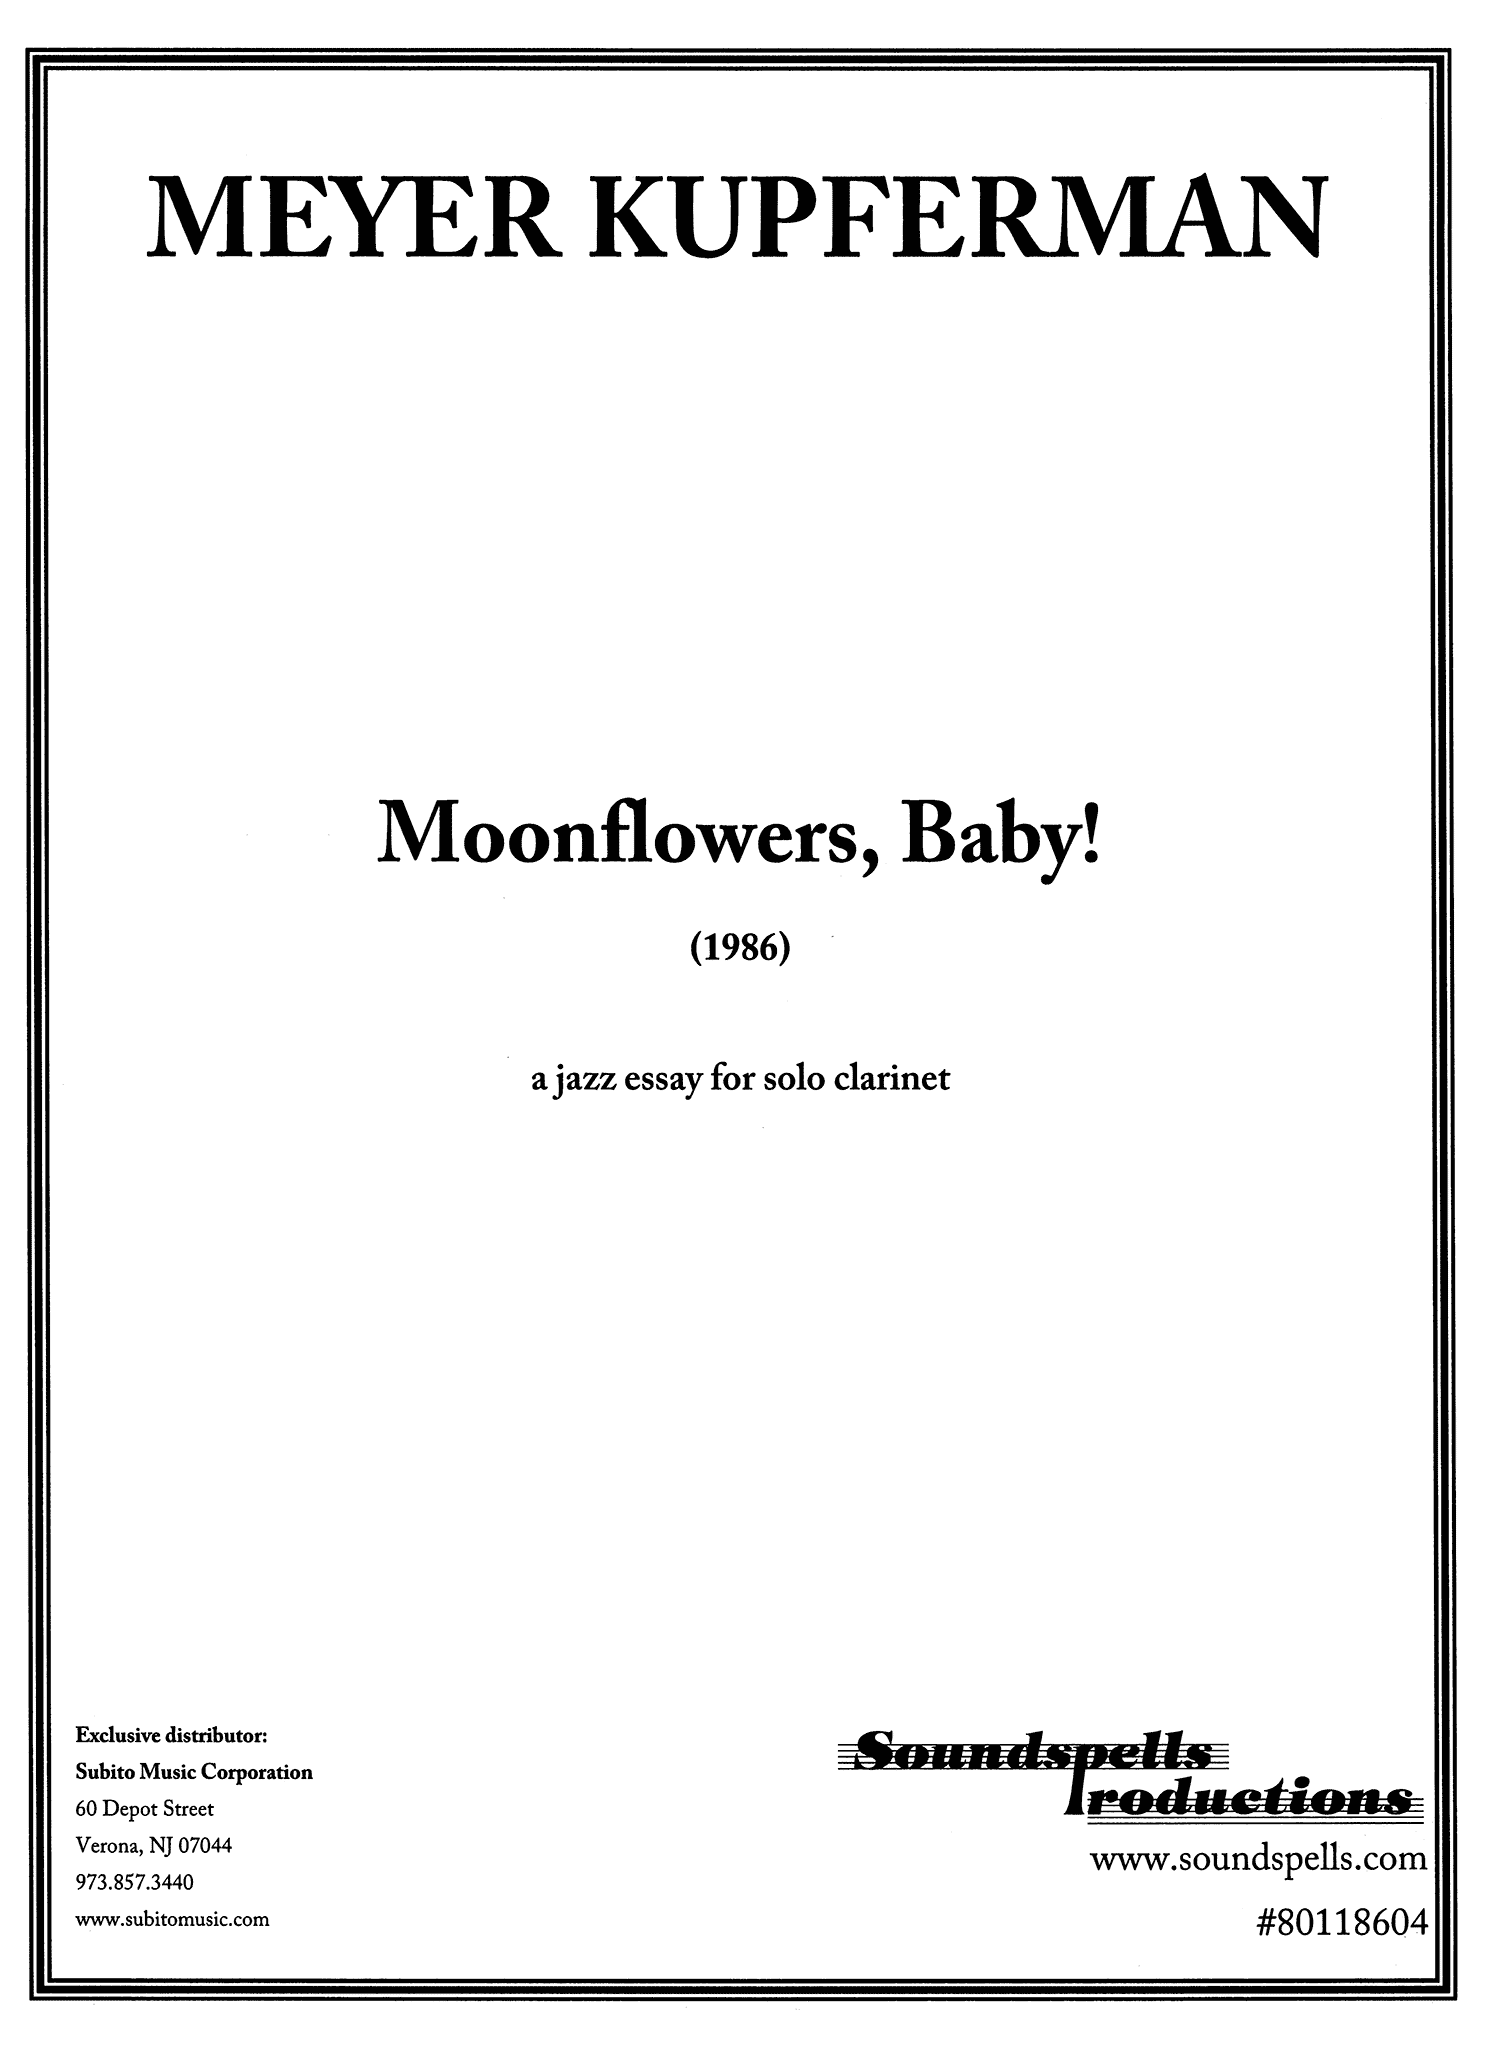 Kupferman Moonflowers, Baby! Cover